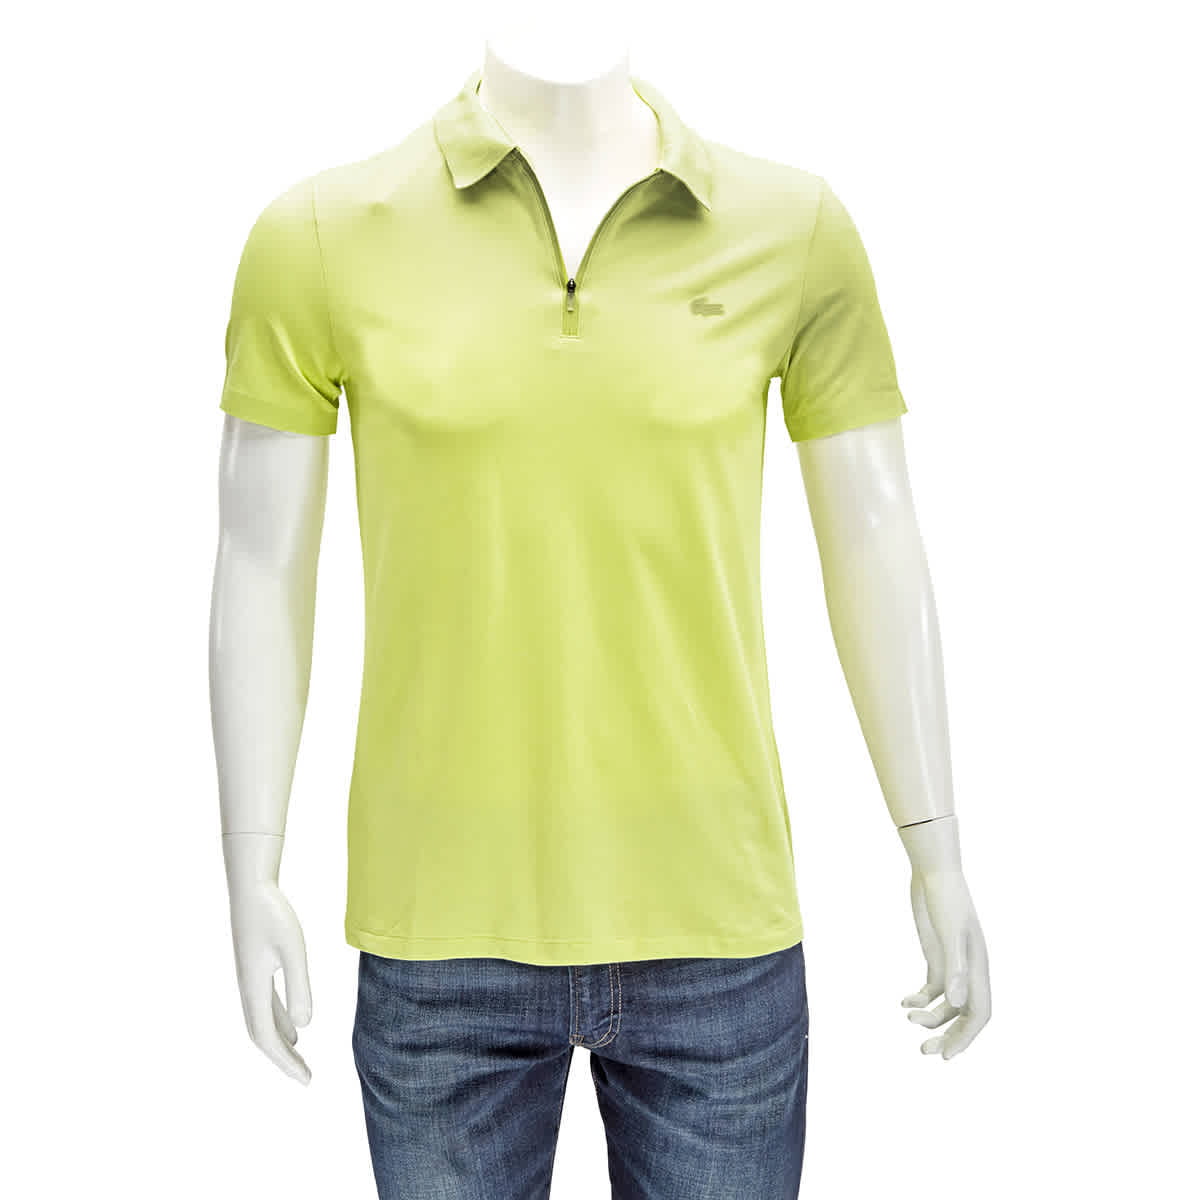 Hverdage krybdyr komme Lacoste Men's Motion Ultra-Light Blue Cotton Polo Shirt, Brand Size 7 -  Walmart.com